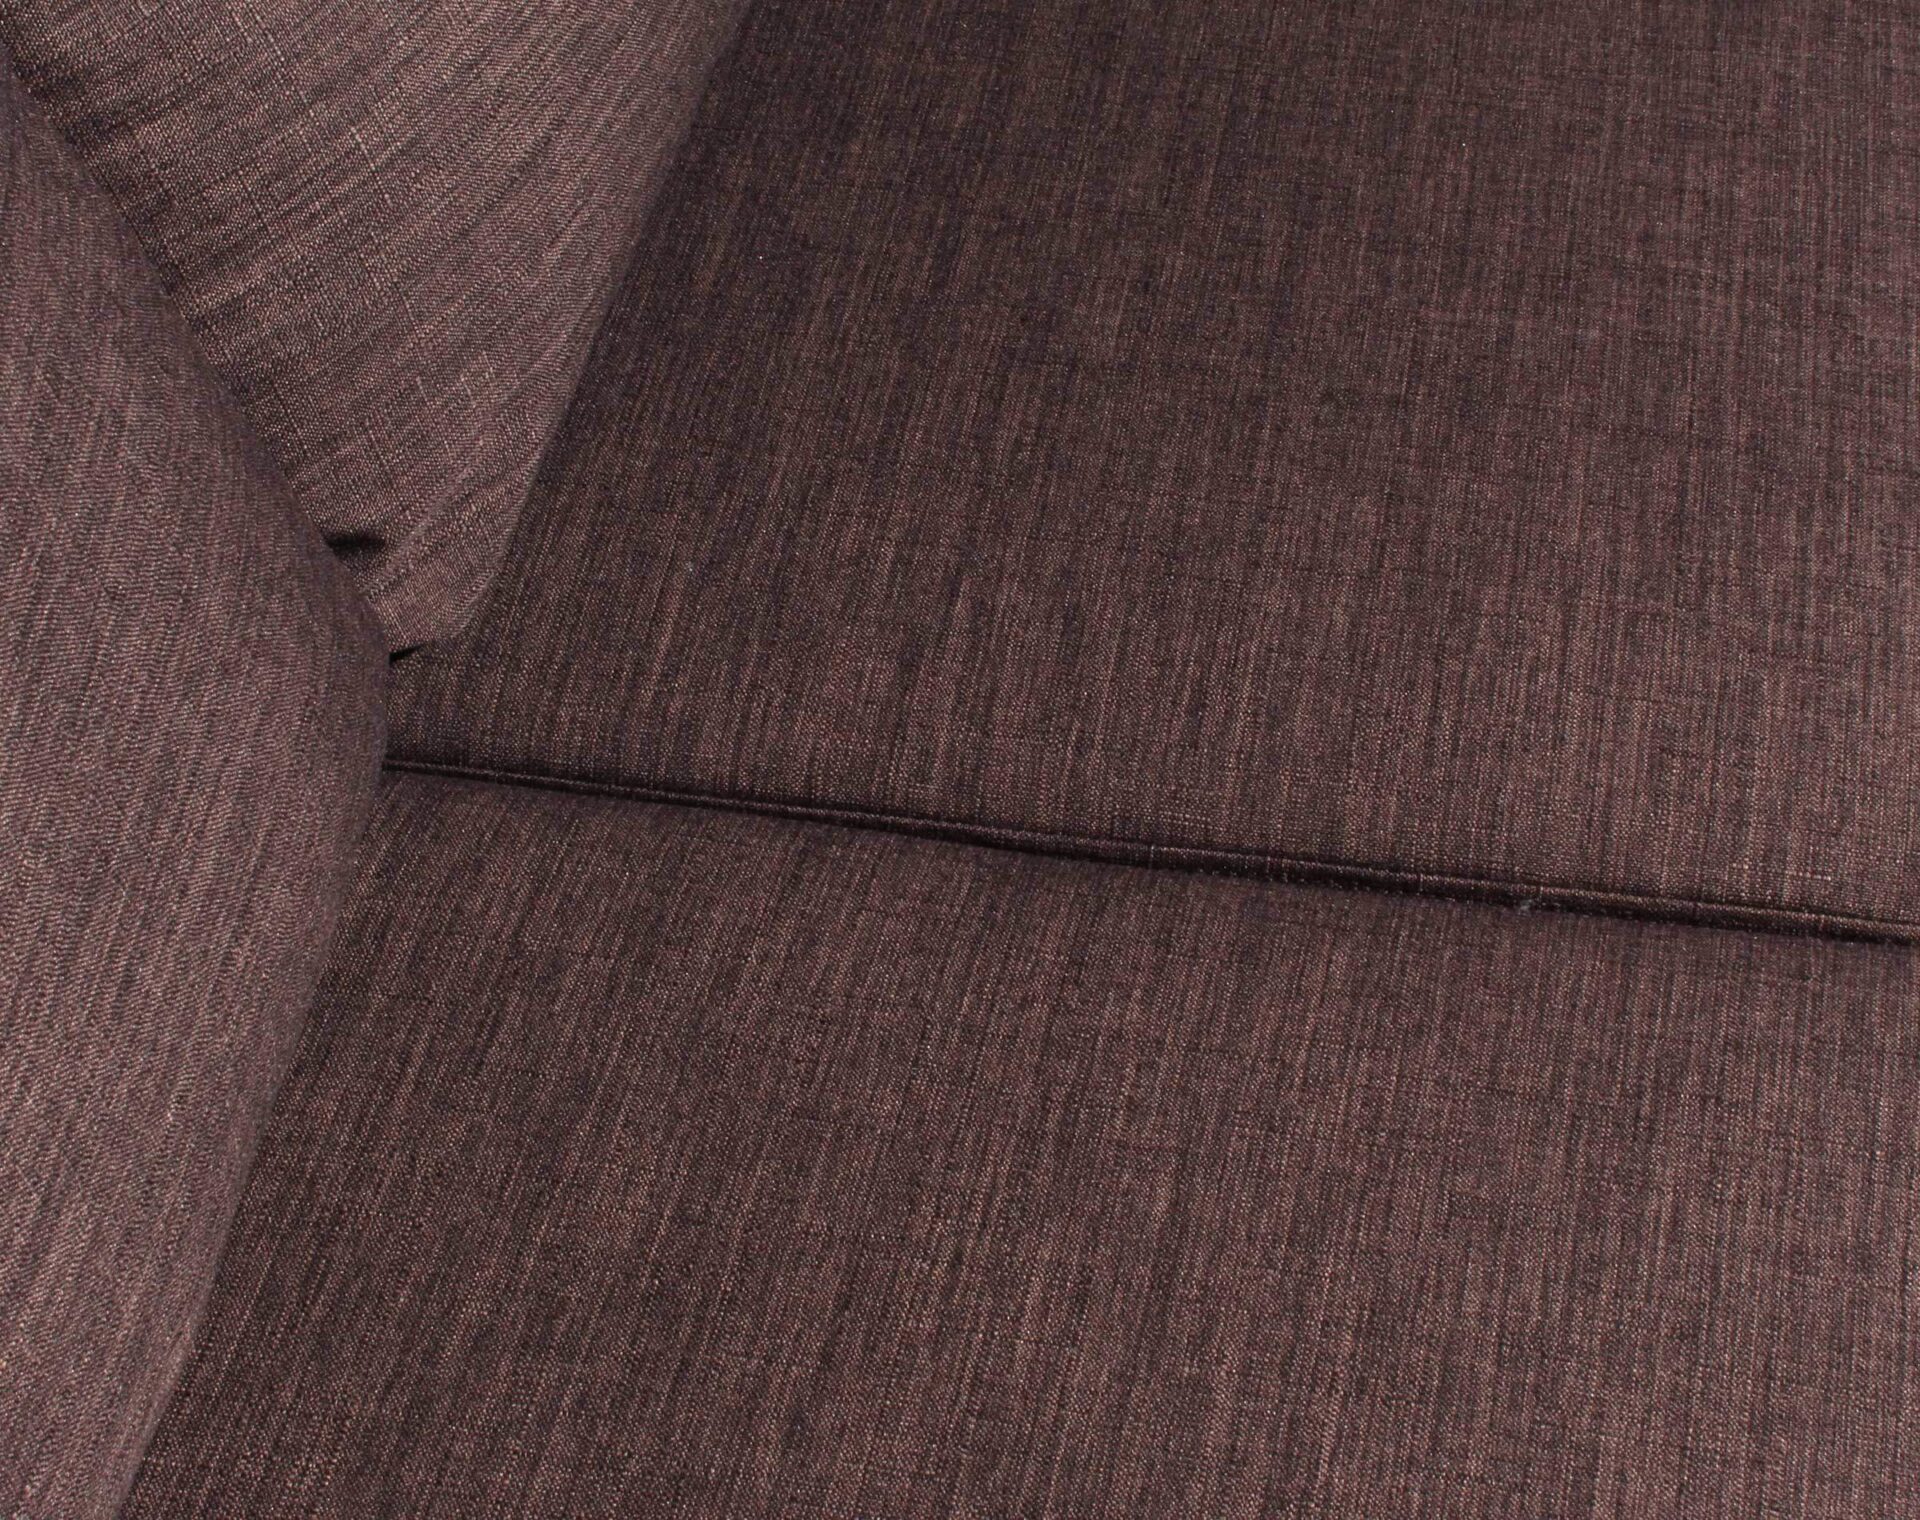 Sofa 3 Cuerpos Milan Chaise Longue Intercambiable Bariloche Chocolate detalle